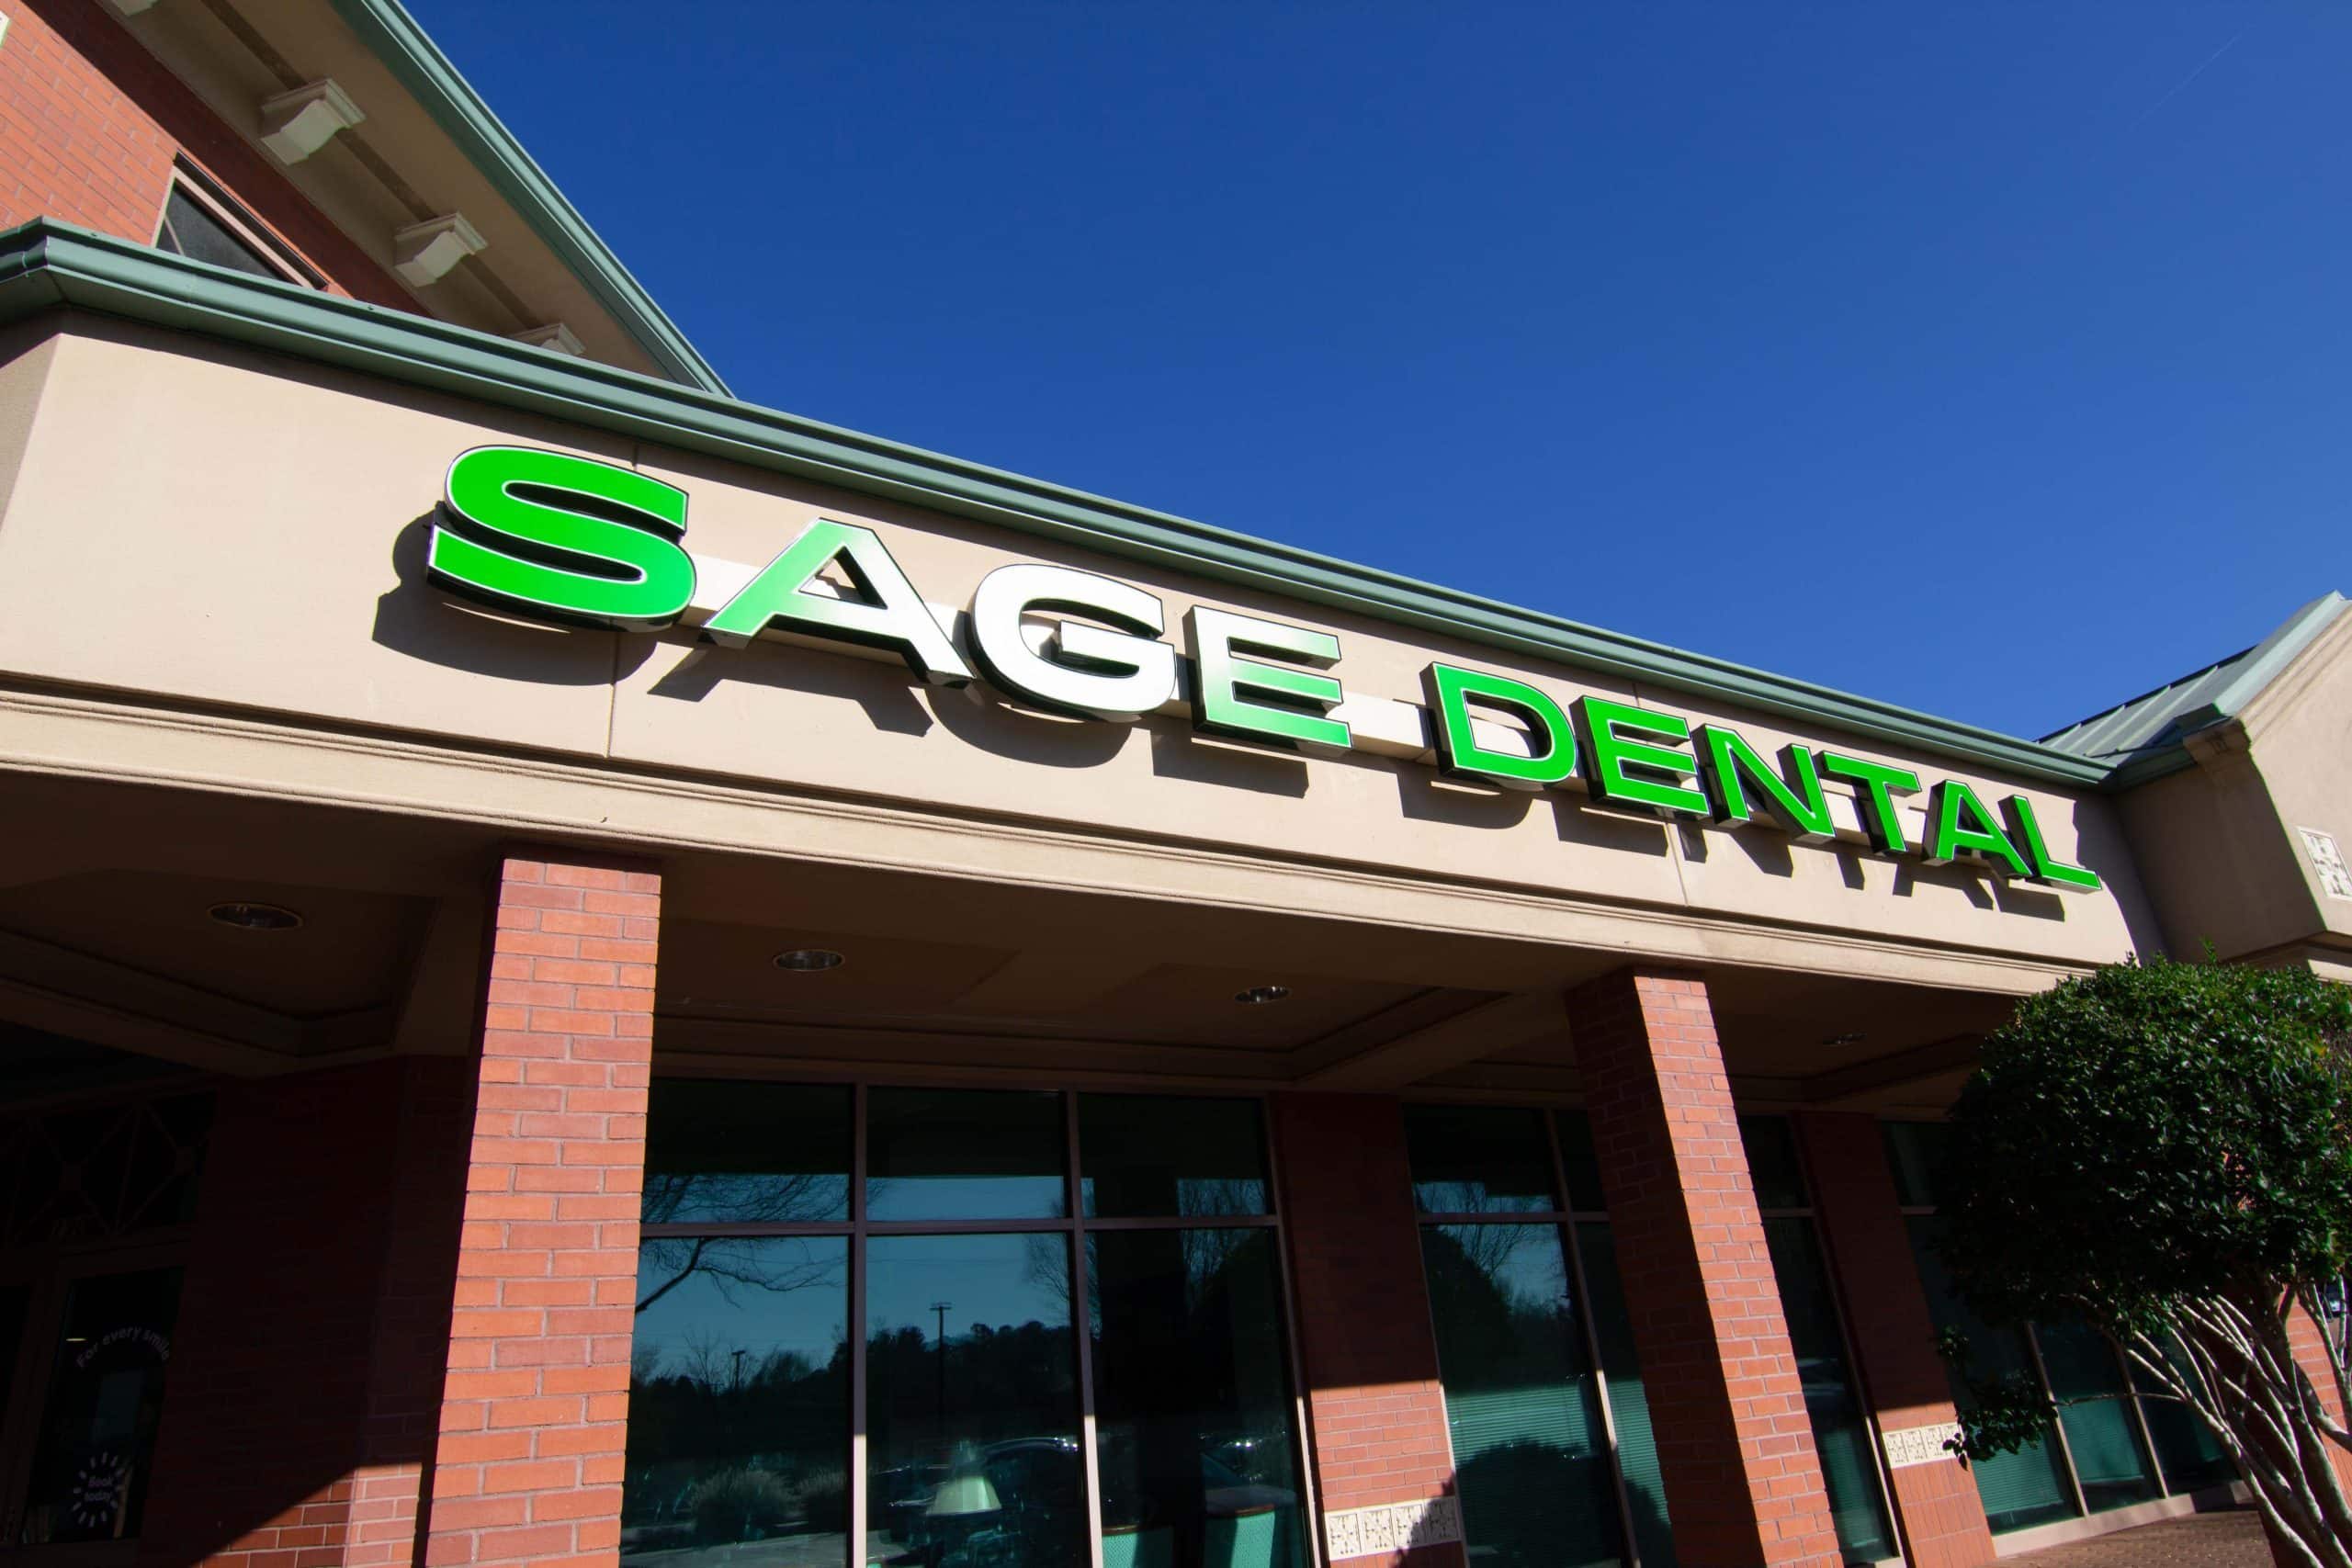 Sage Dental office in Marietta Georgia